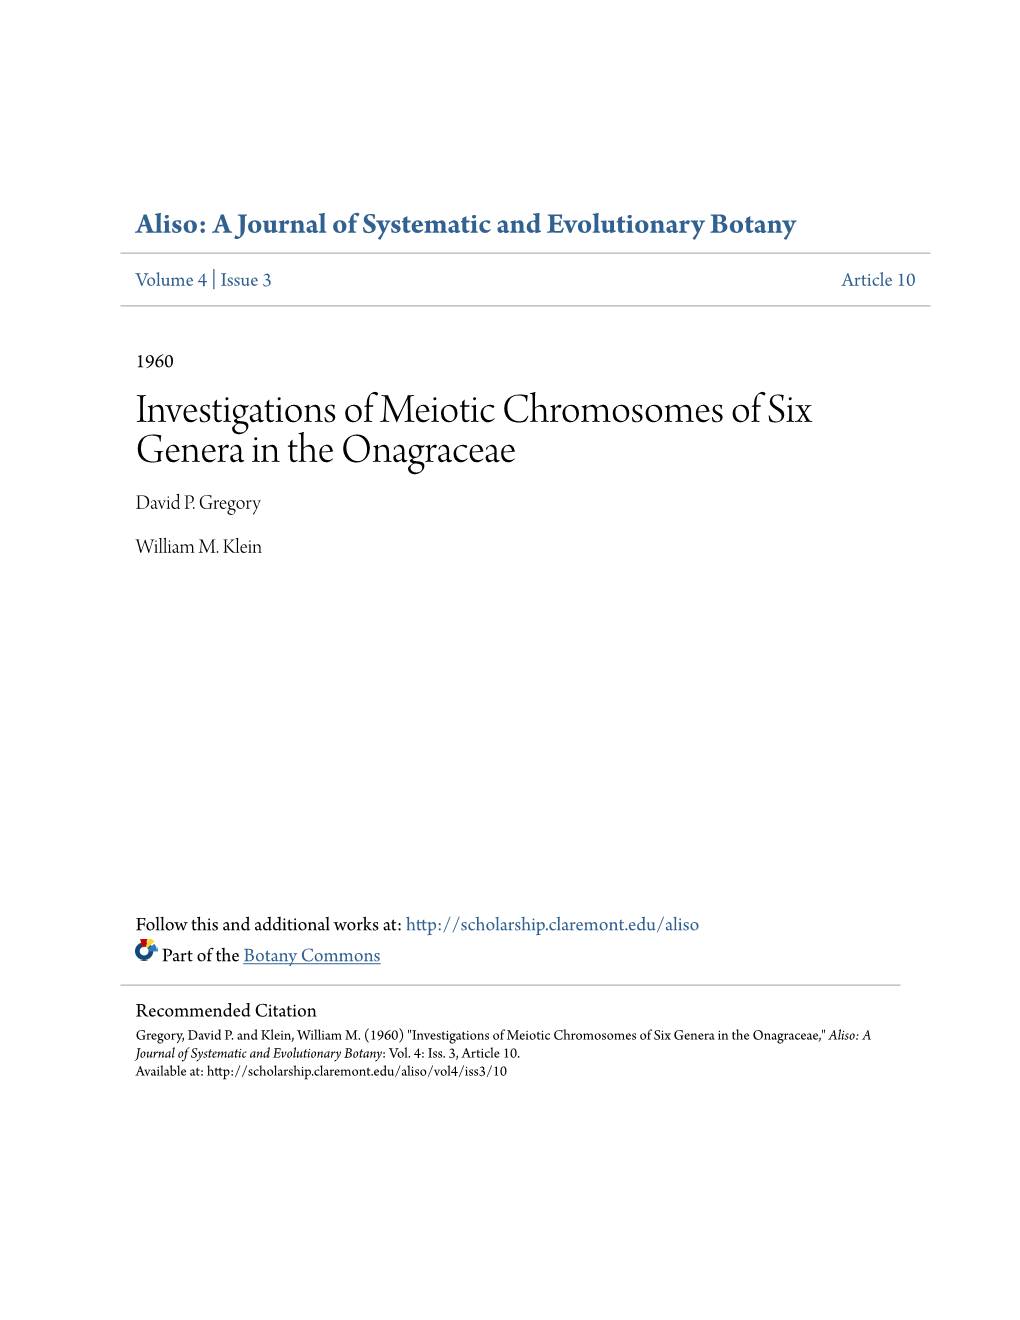 Investigations of Meiotic Chromosomes of Six Genera in the Onagraceae David P